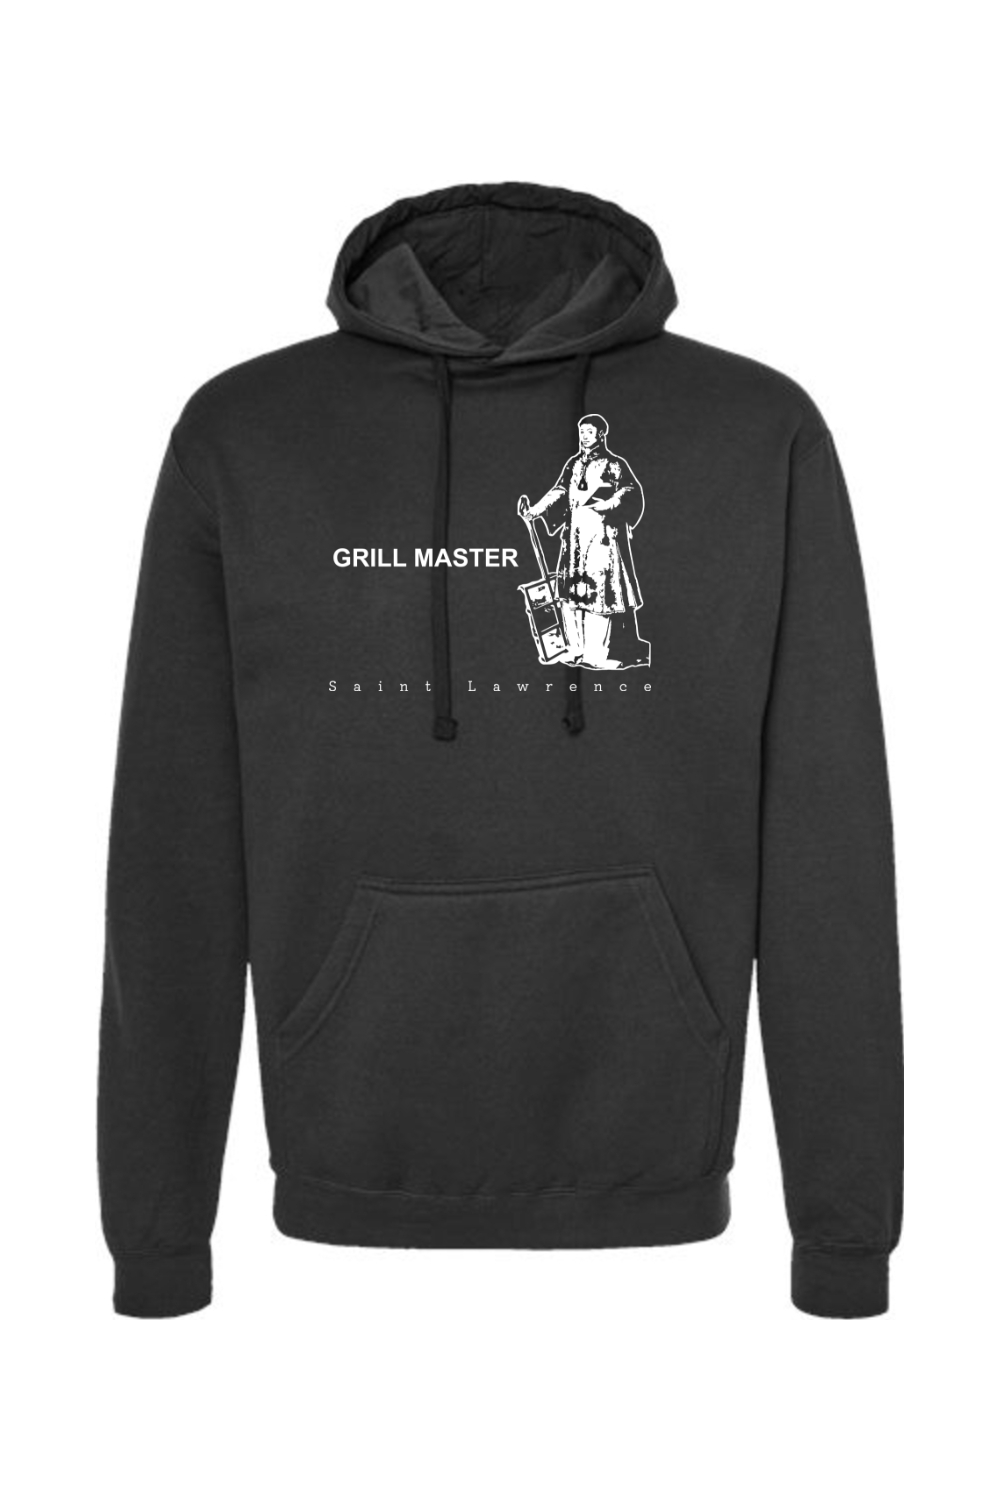 Grill Master - St. Lawrence Hoodie Sweatshirt